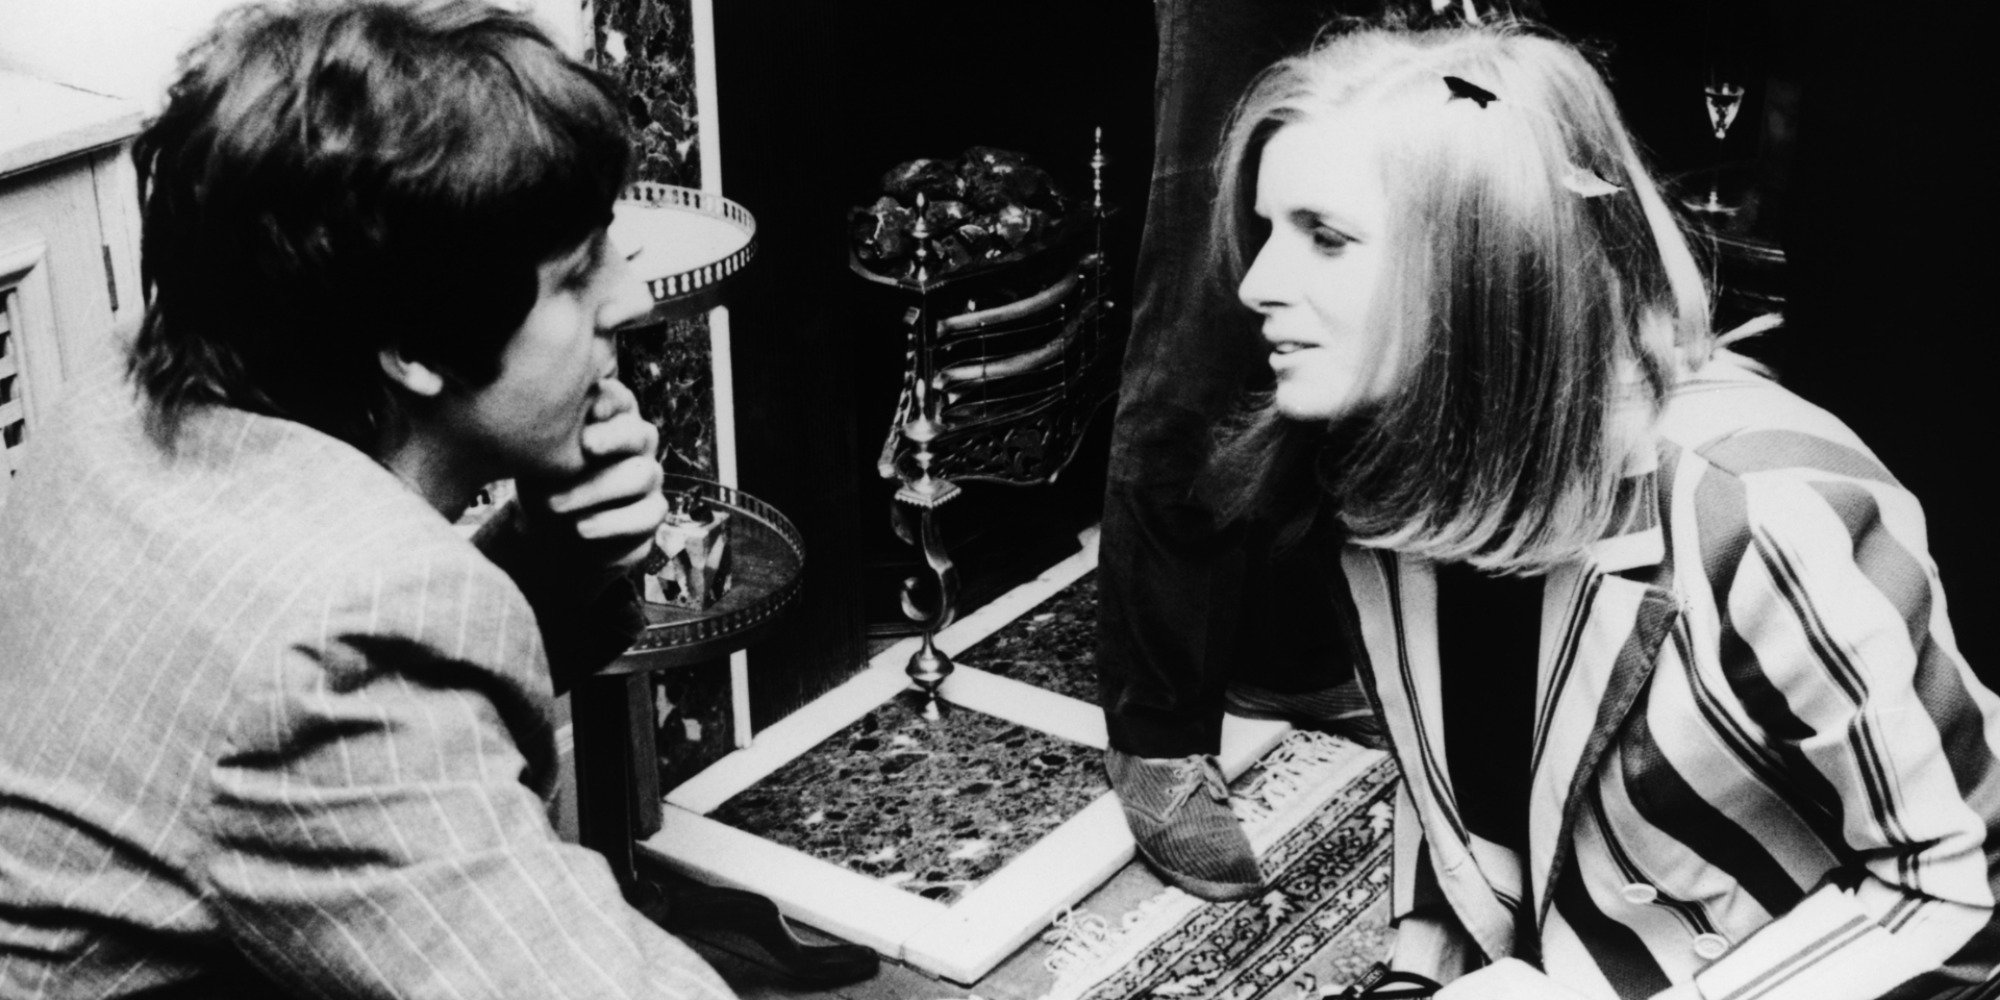 Paul McCartney and then Linda Eastman talk in 1967.